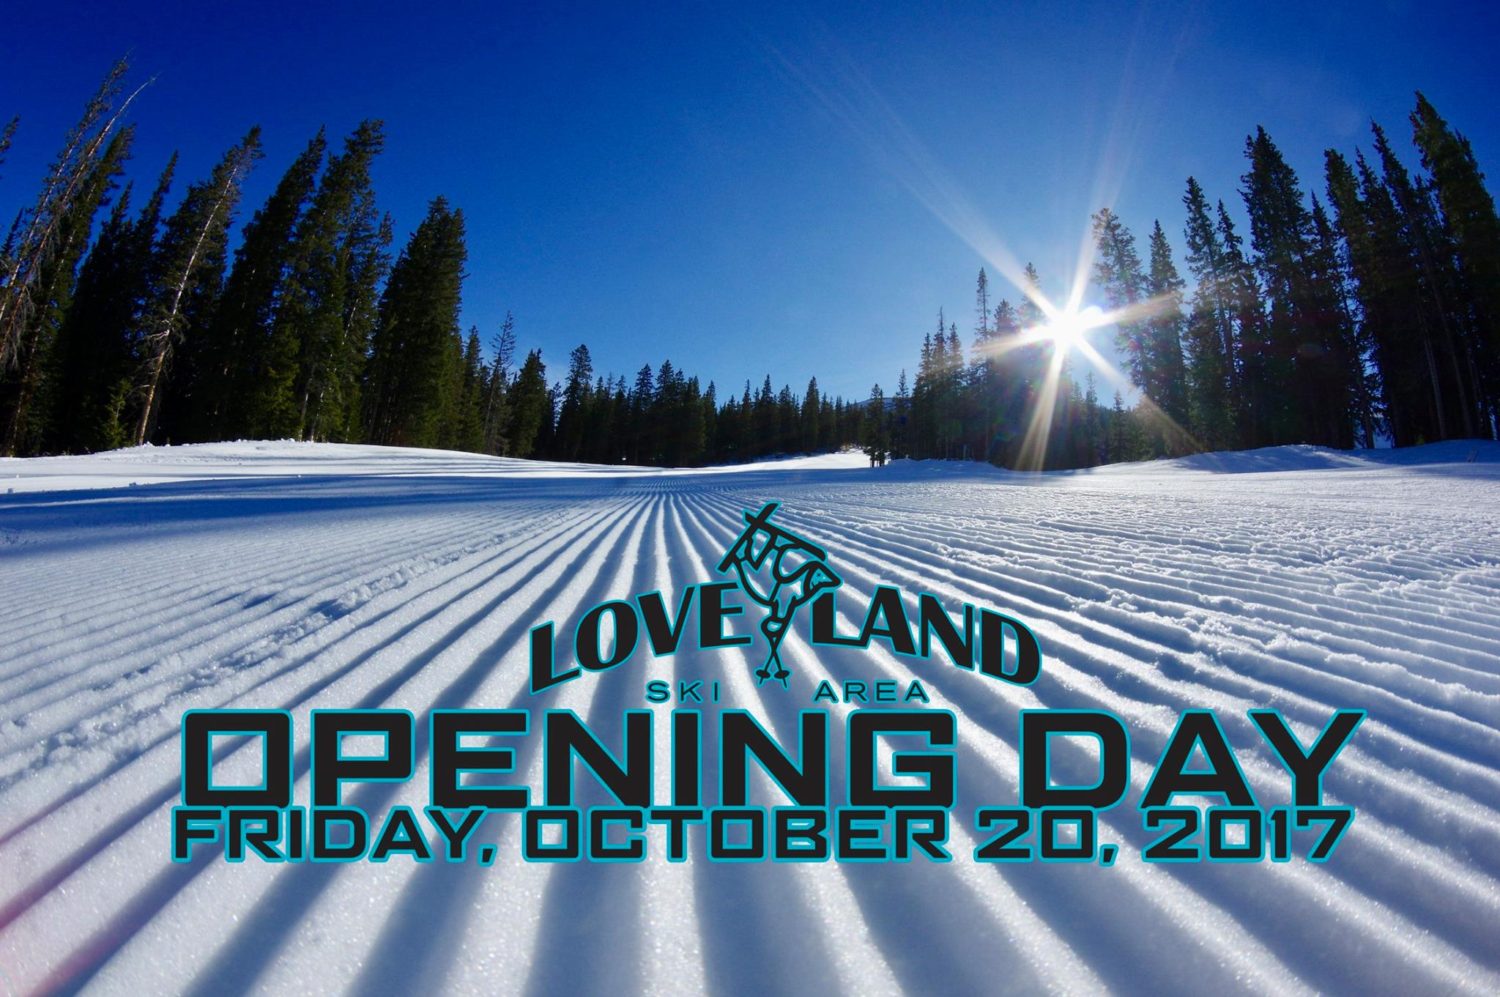 Loveland Opening Day SnowBrains